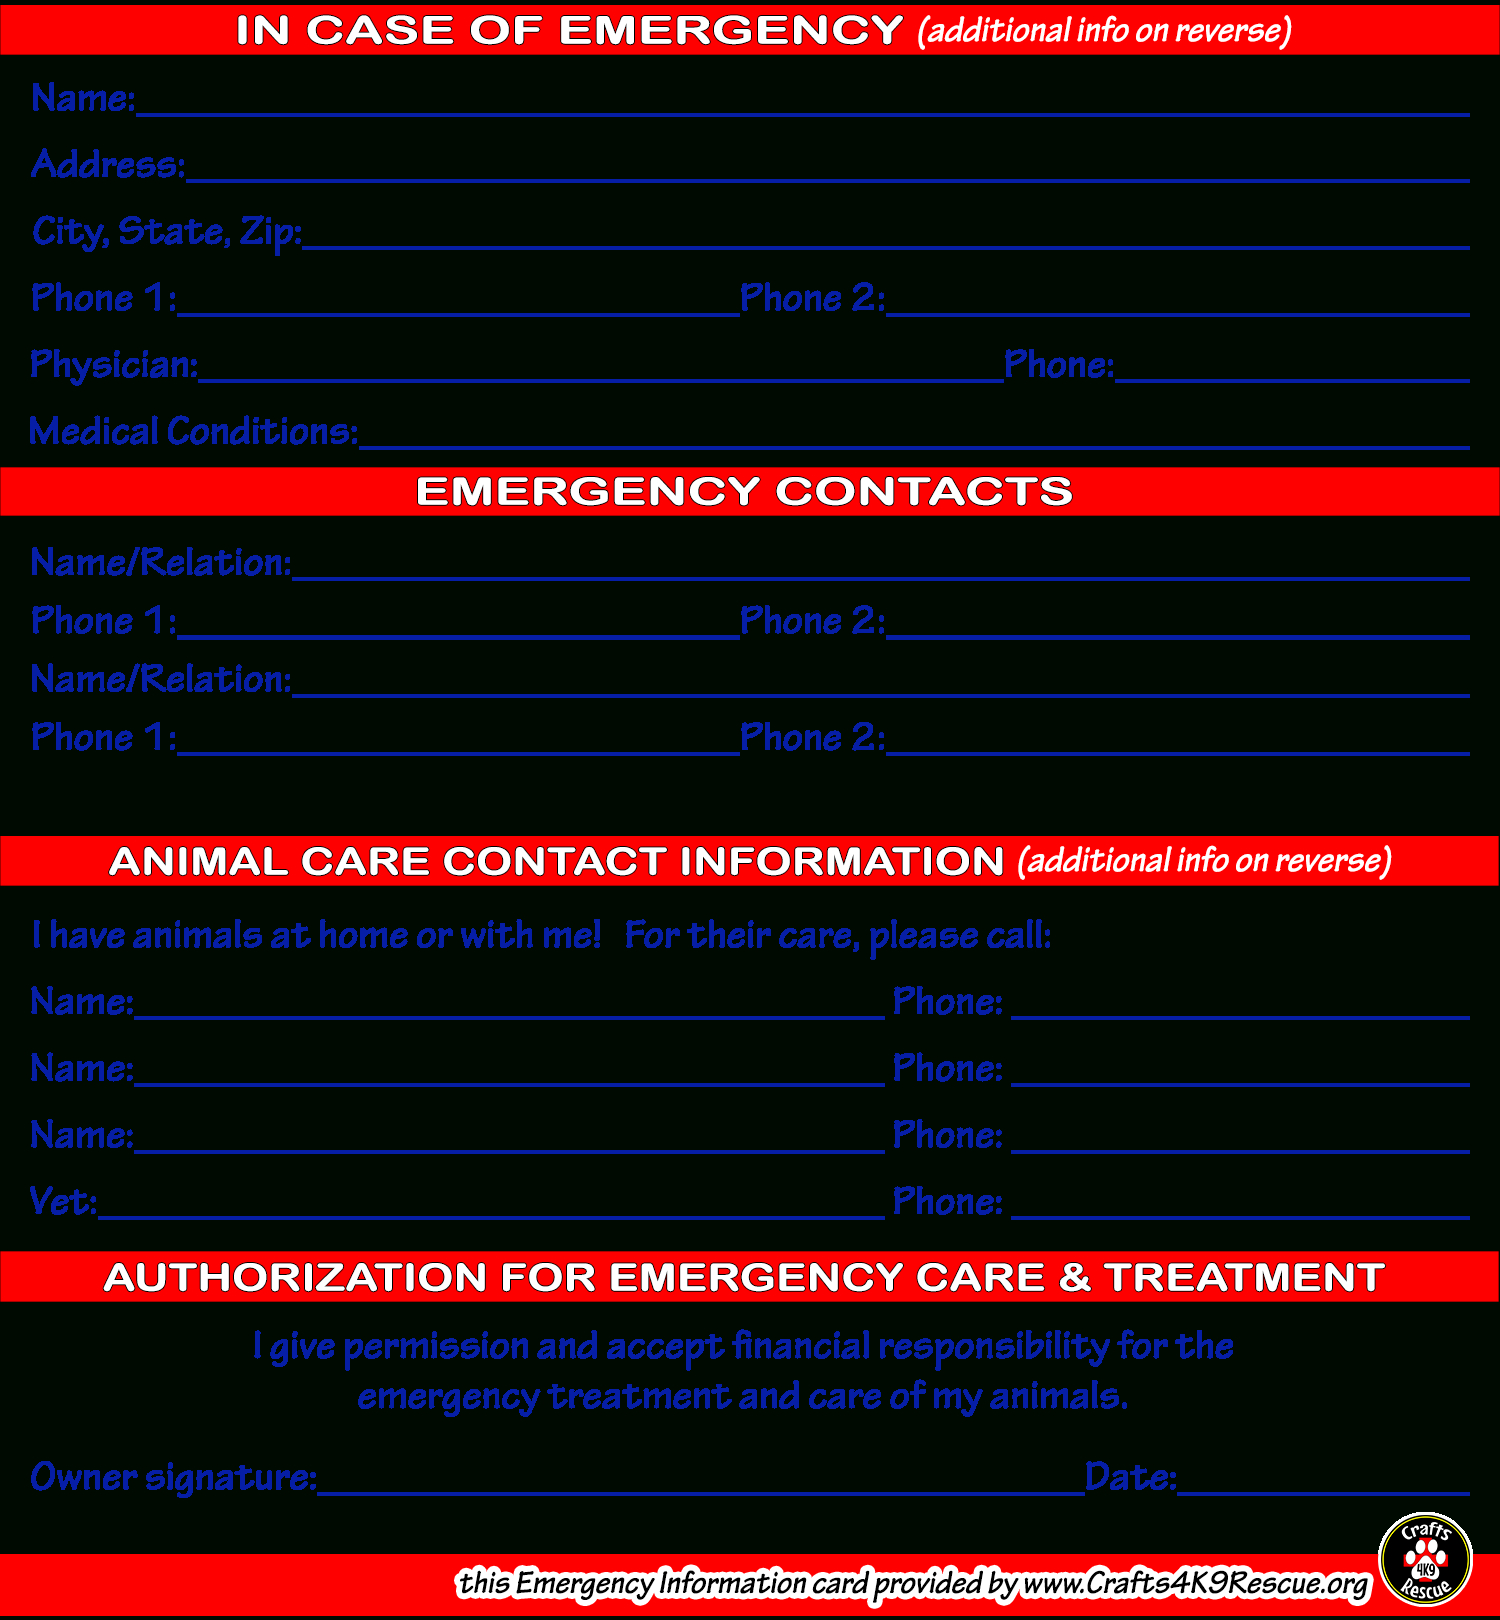 Emergency Information Card Template | Crafts4K9Rescue Within In Case Of Emergency Card Template